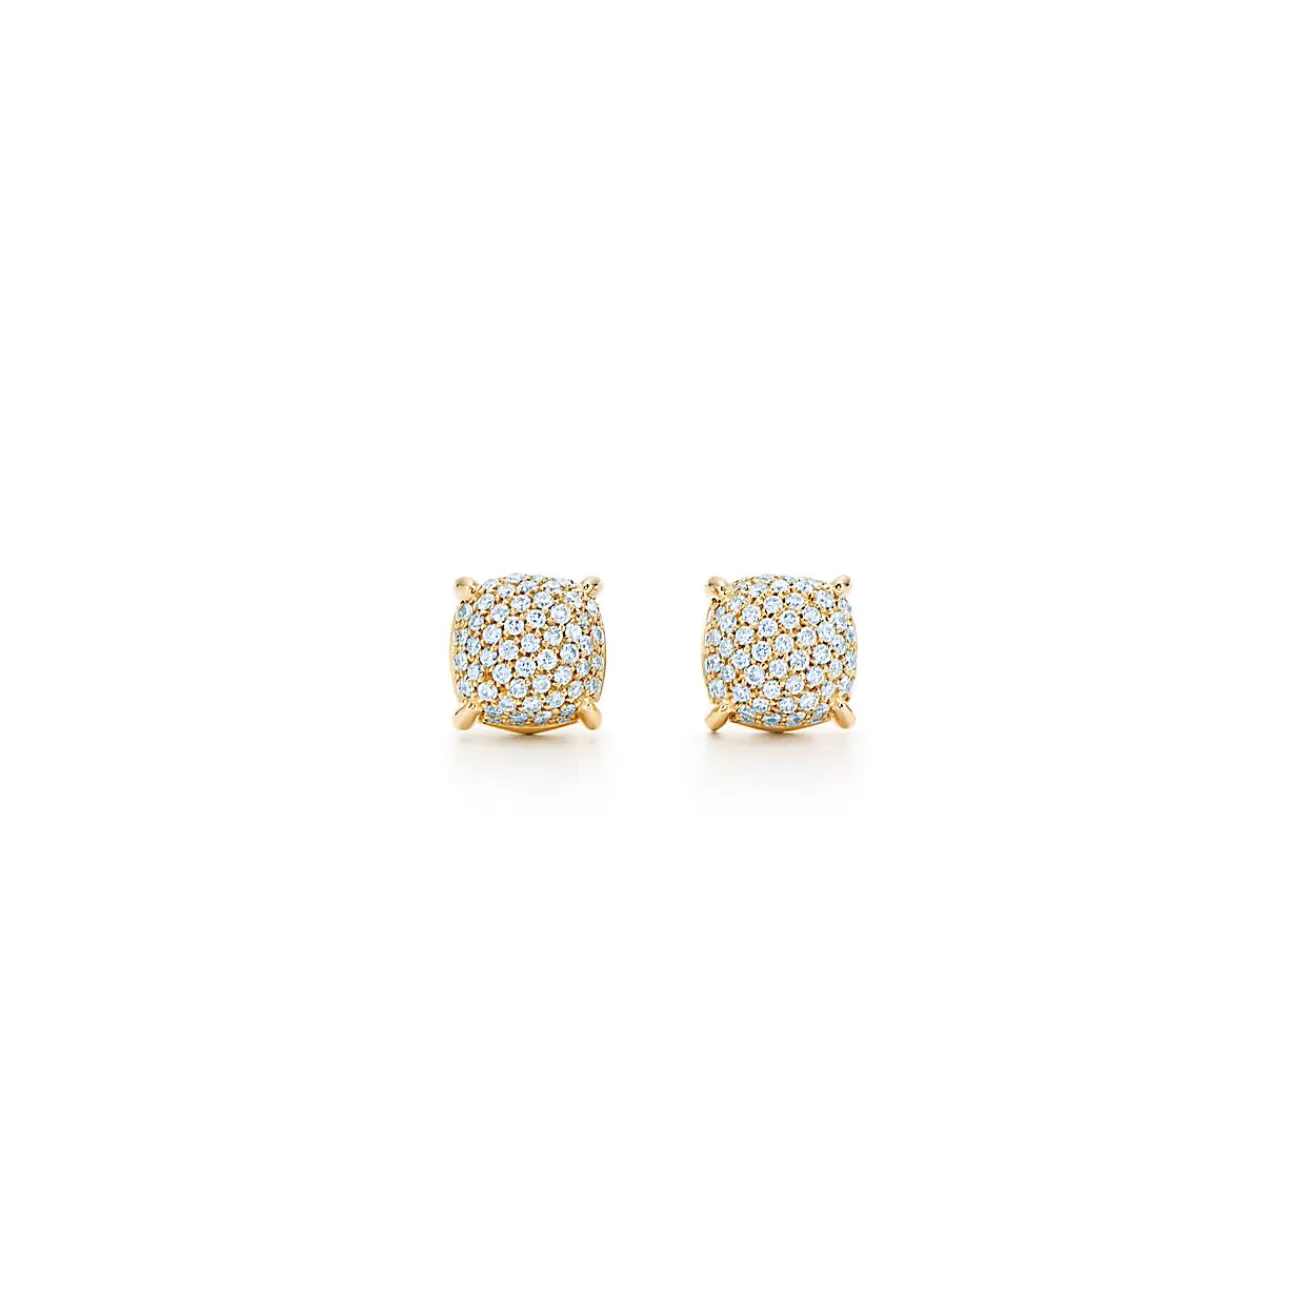 Tiffany & Co. Paloma's Sugar Stacks earrings in 18k gold with diamonds. | ^ Earrings | Gold Jewelry